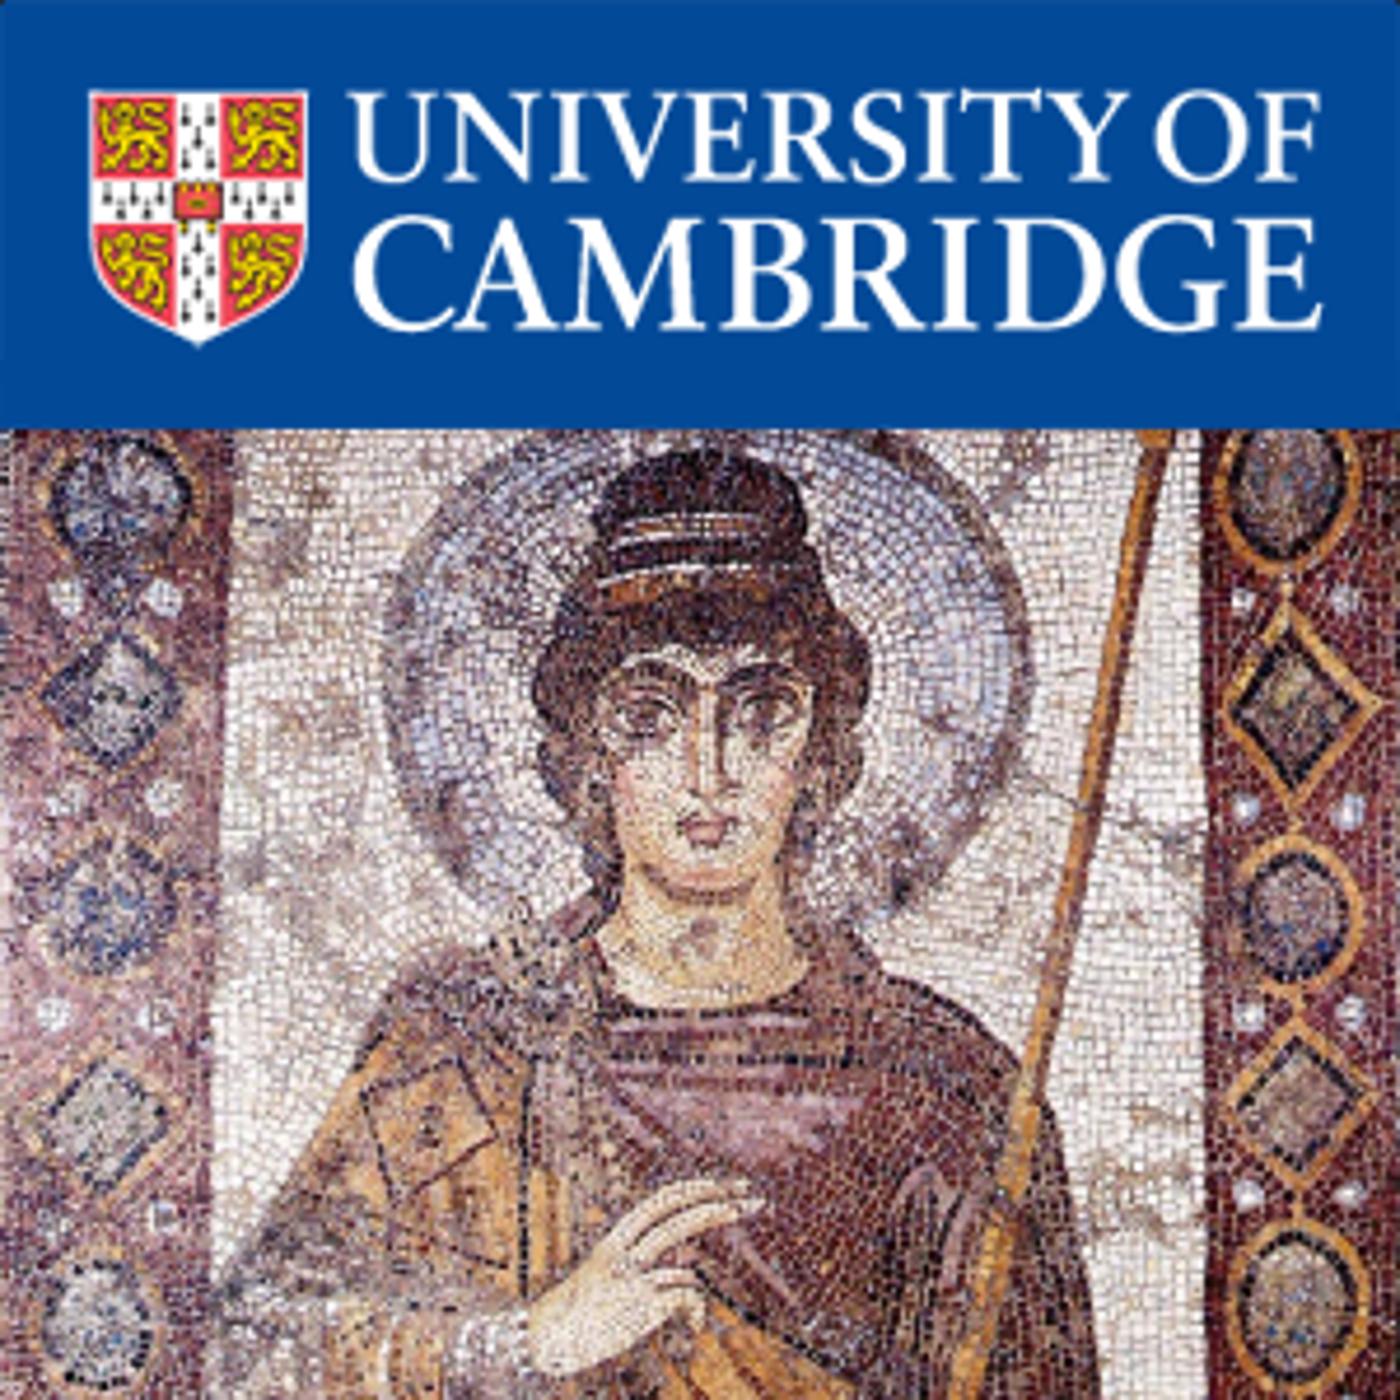 Cambridge Late Antiquity Network Seminar